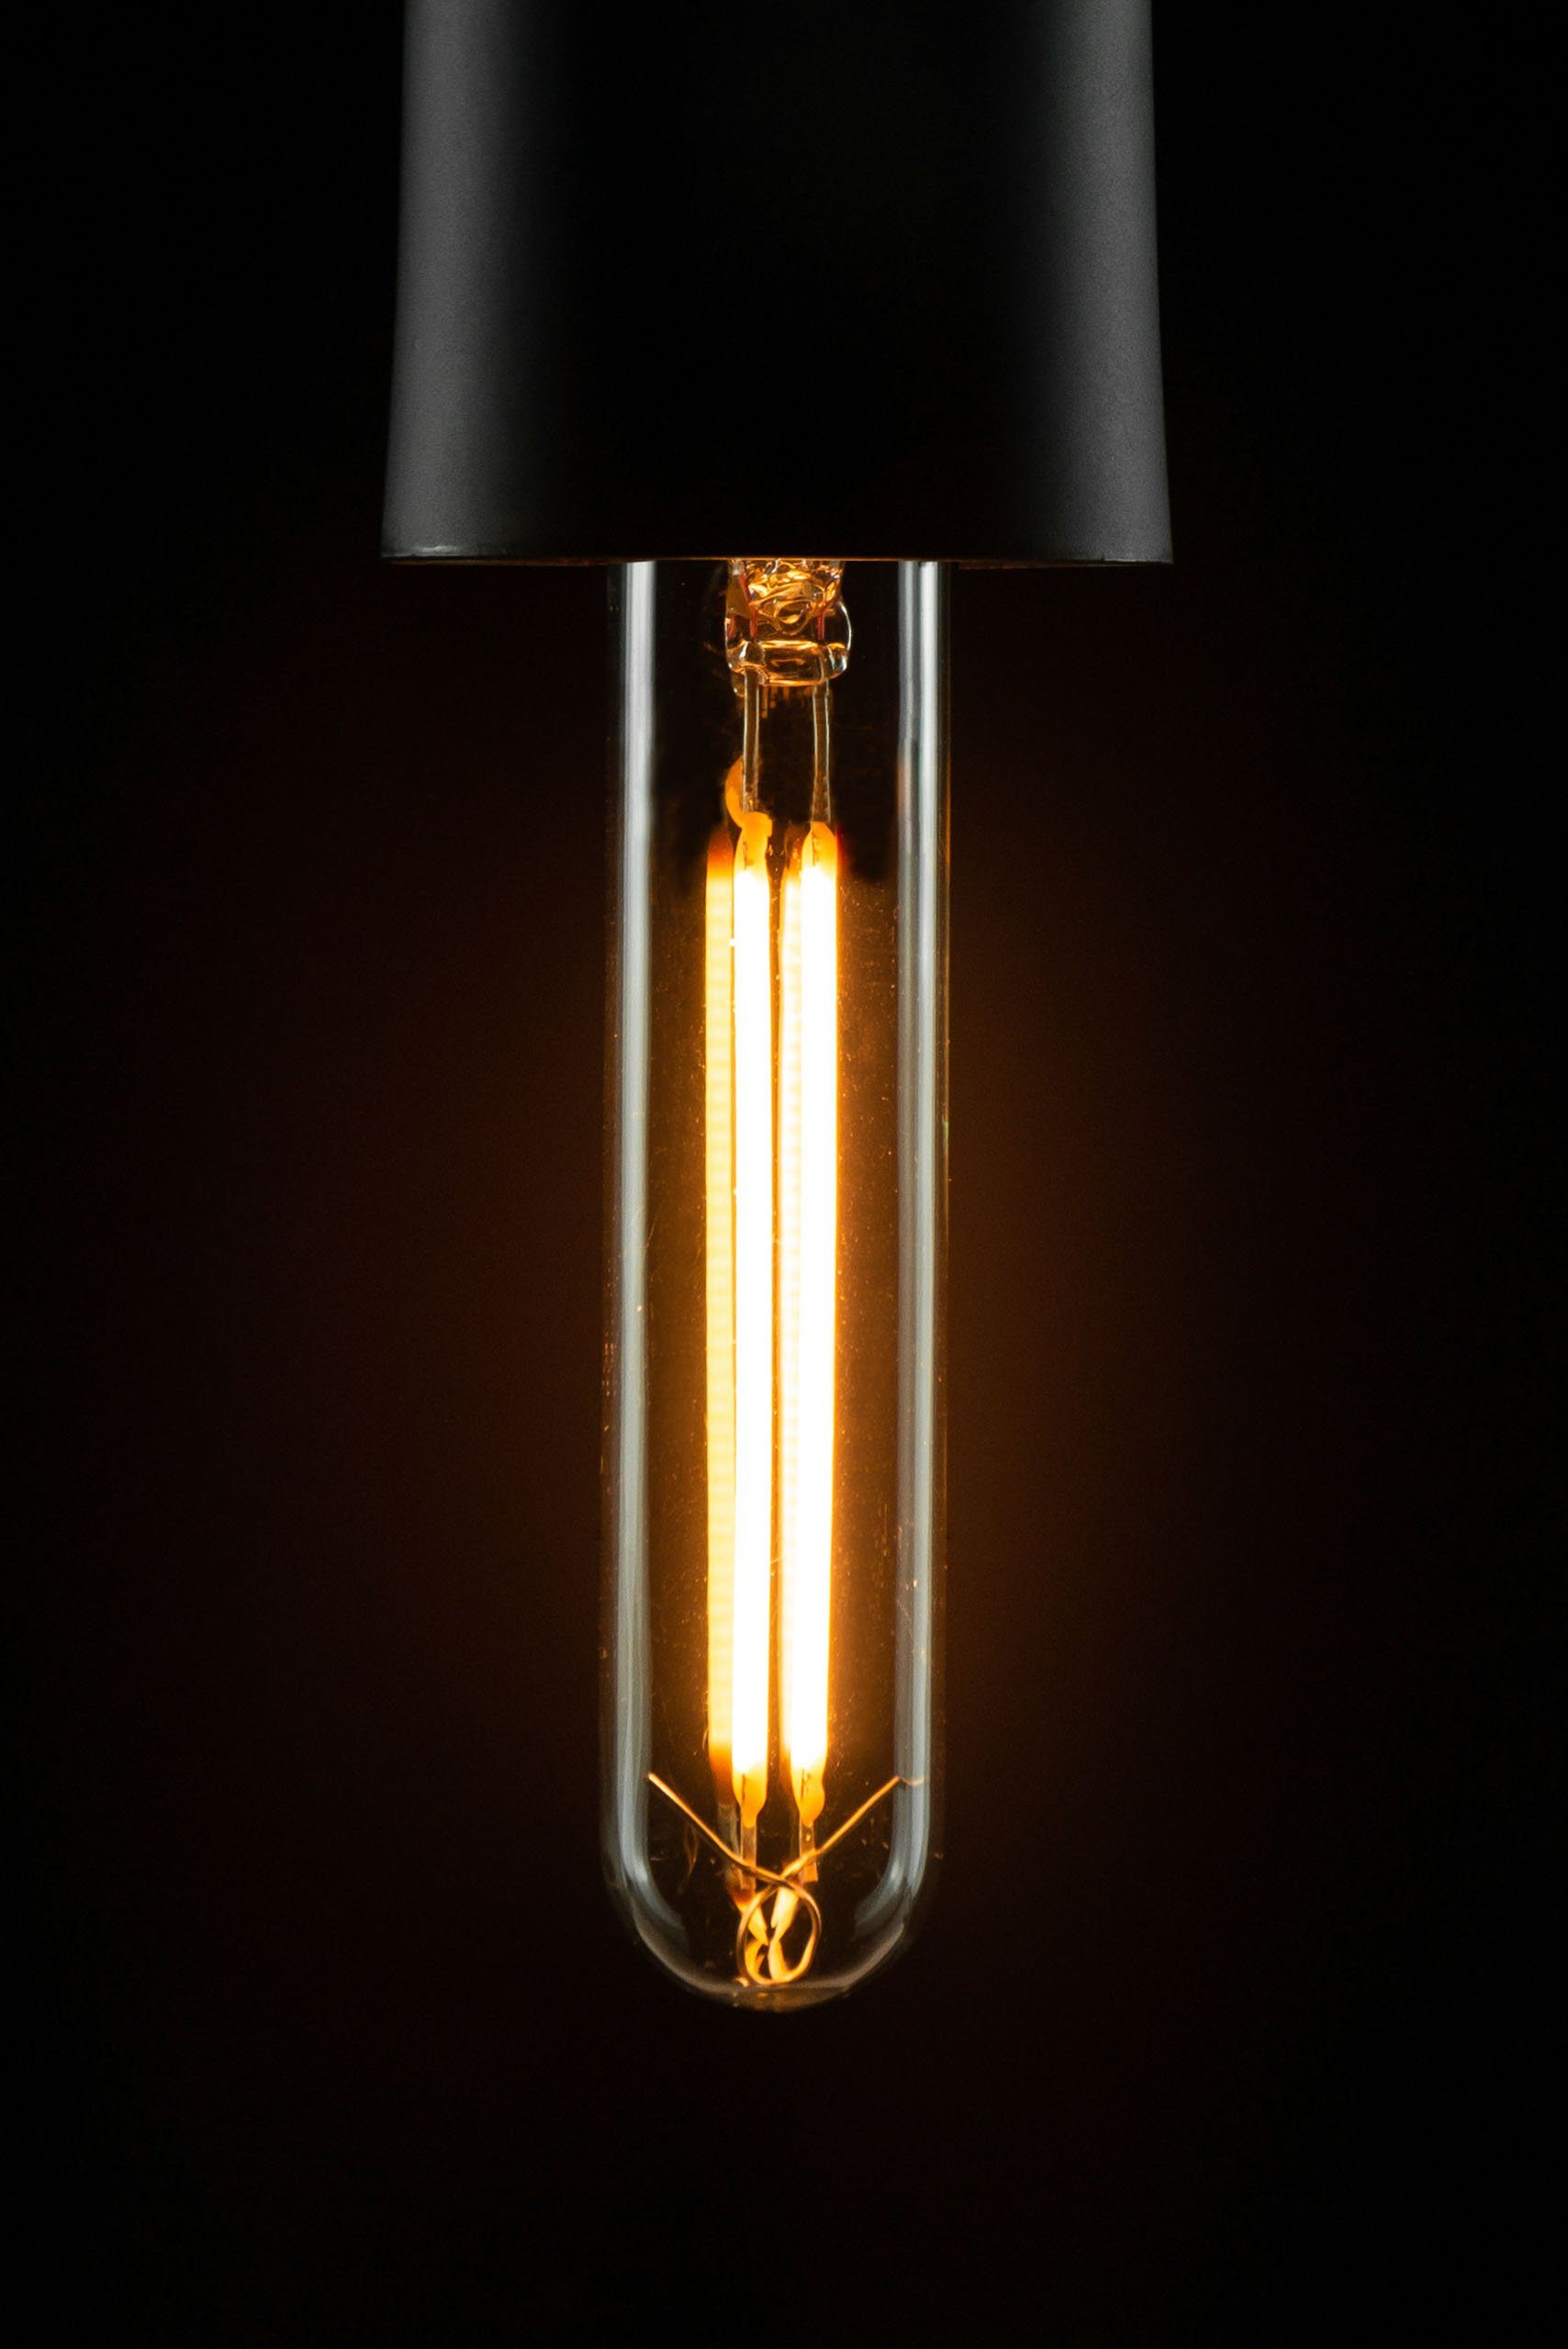 SEGULA LED-Leuchtmittel Vintage E27 Tube Line, St., 1 dimmbar, E14, Warmweiß, klar